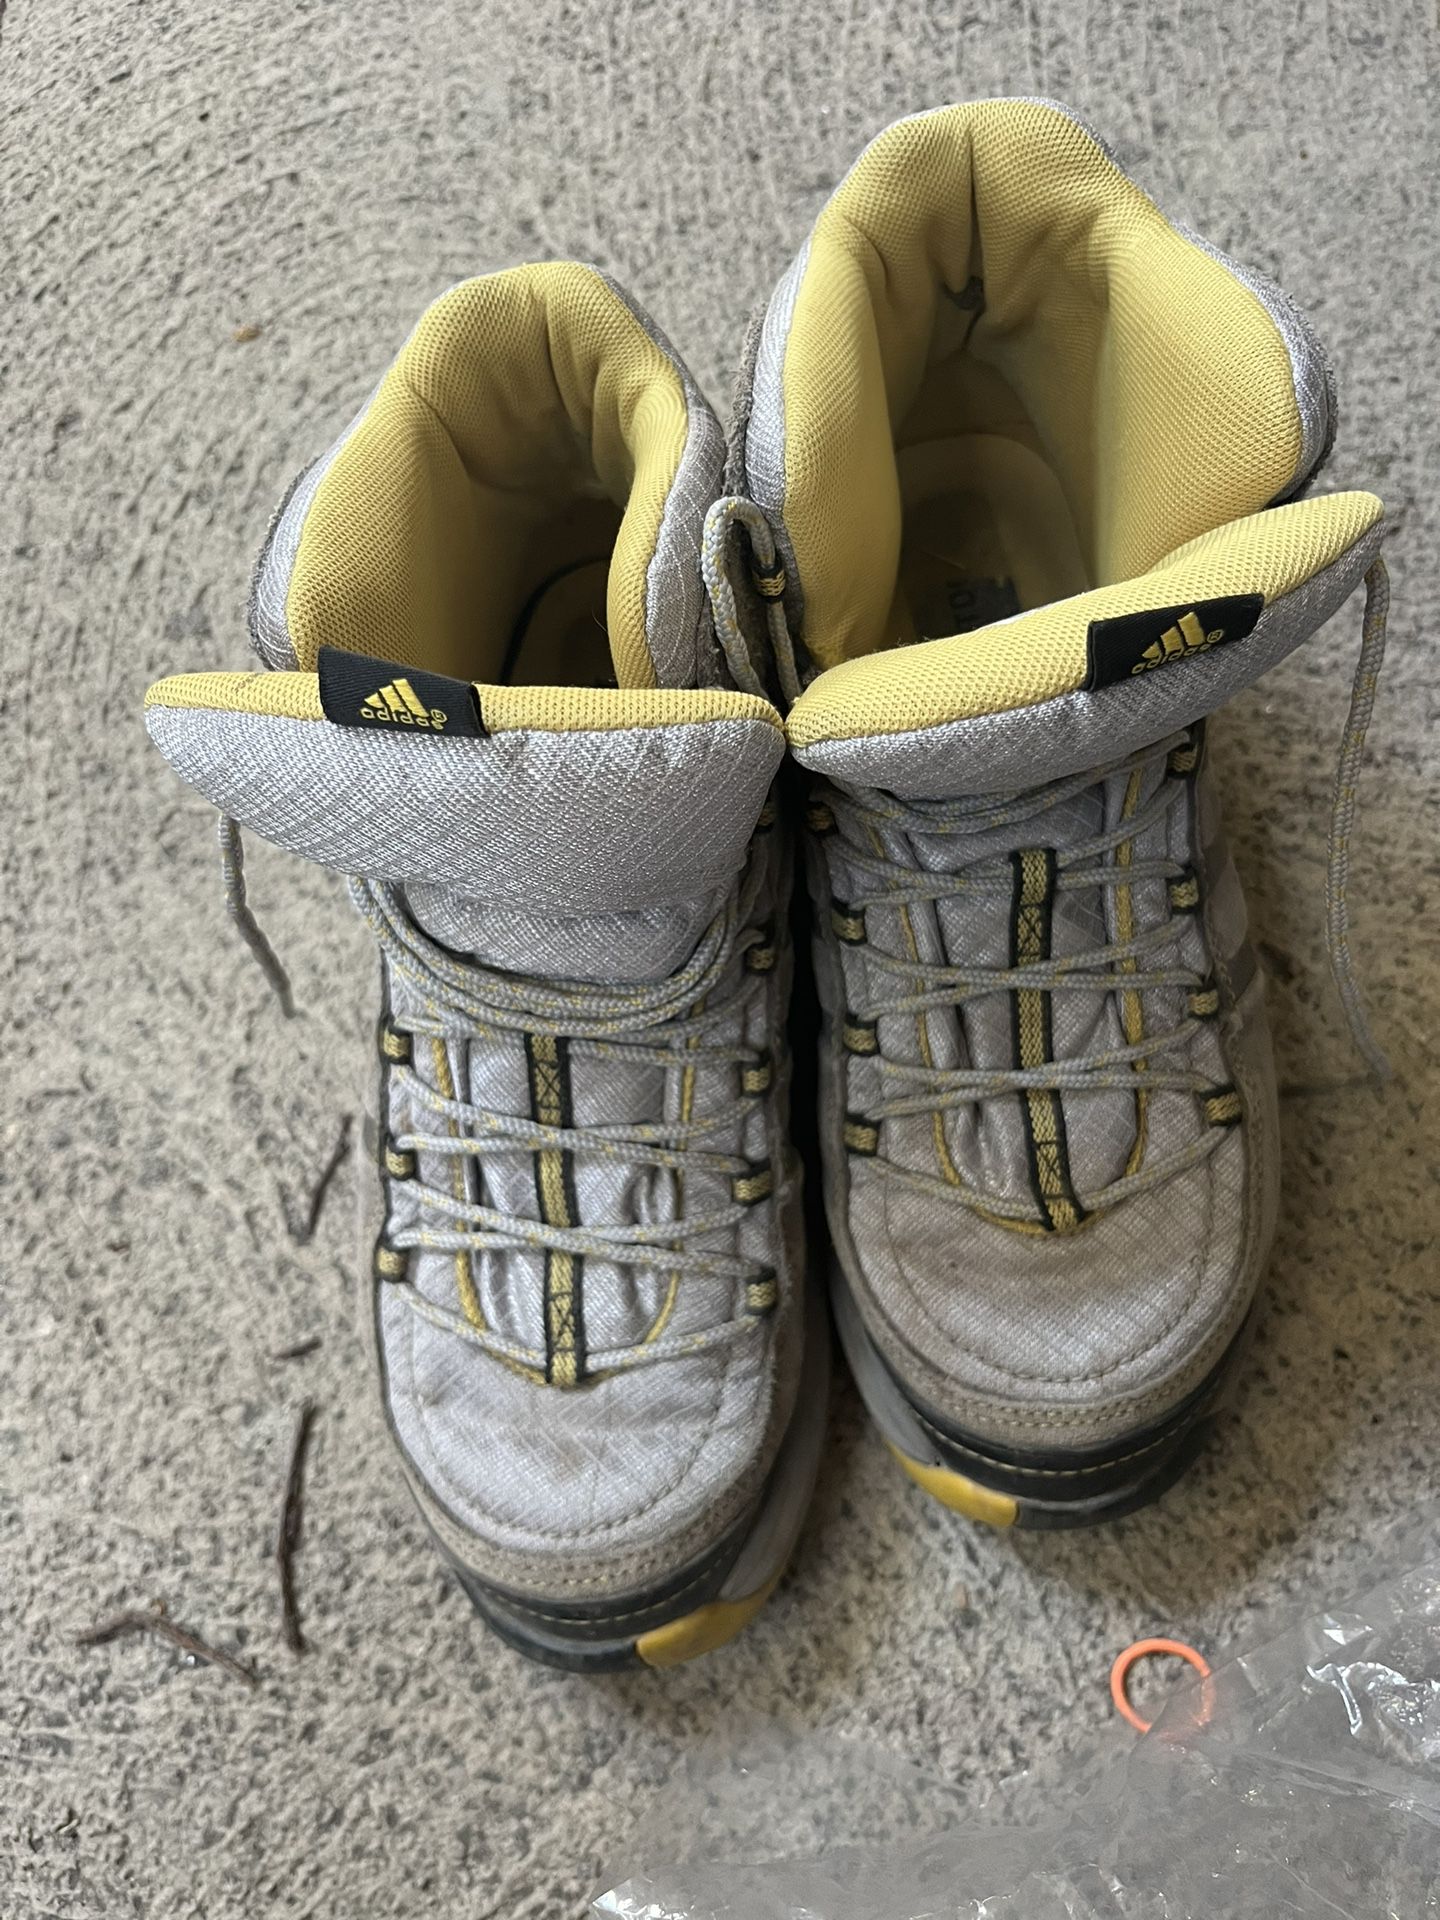 Adidas Hiking Boots Size 6